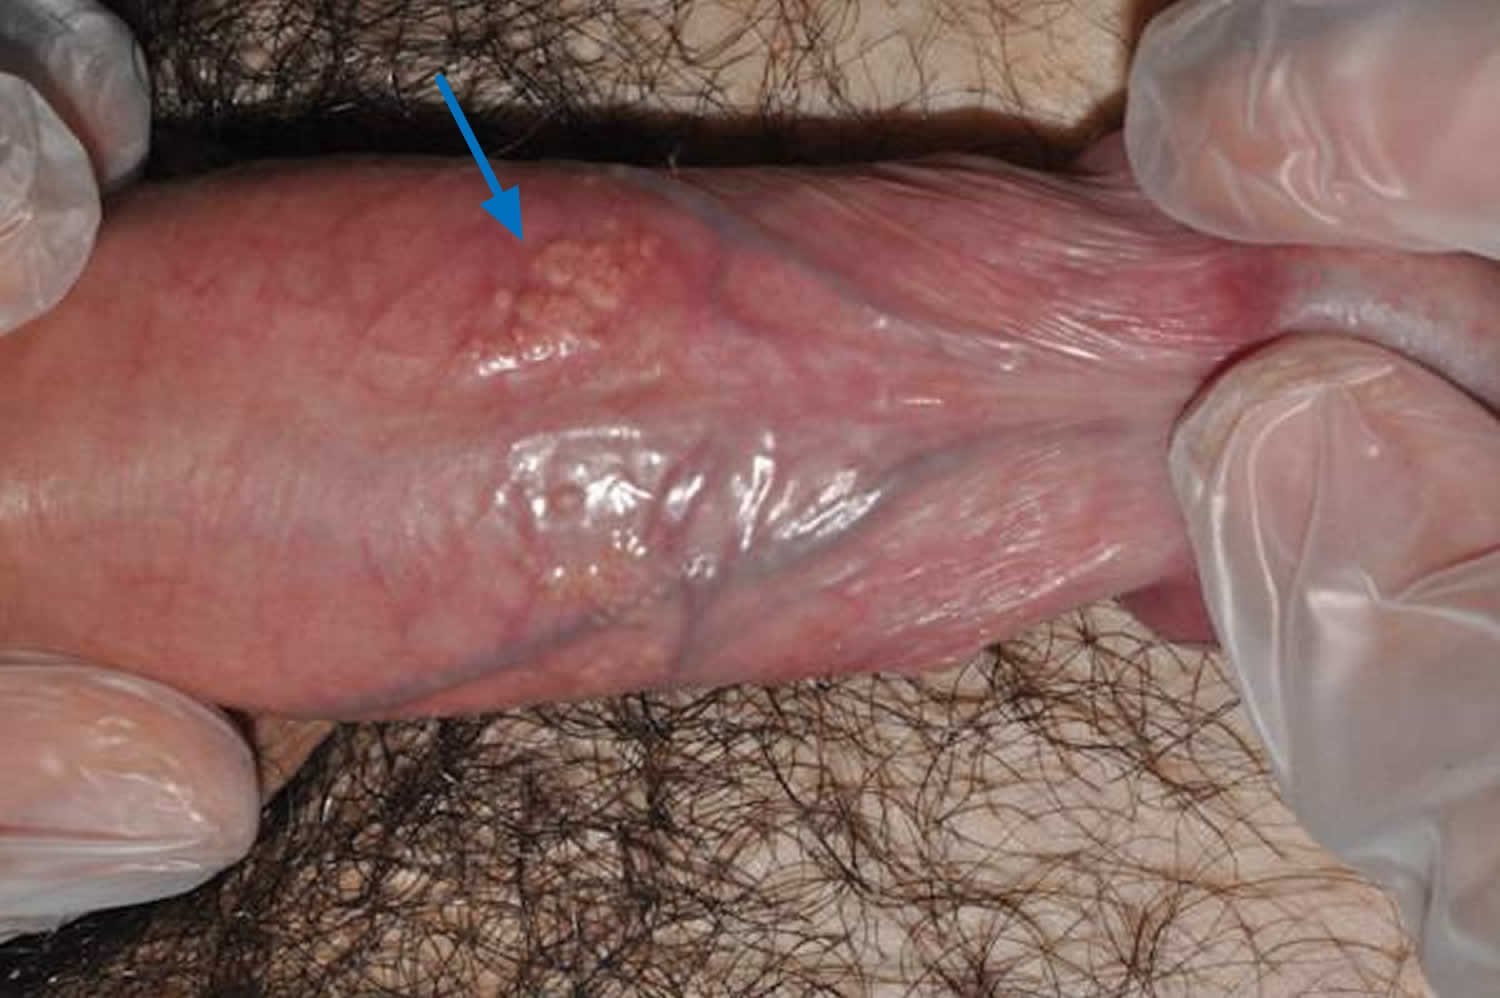 Fordyce spots on shaft of penis.